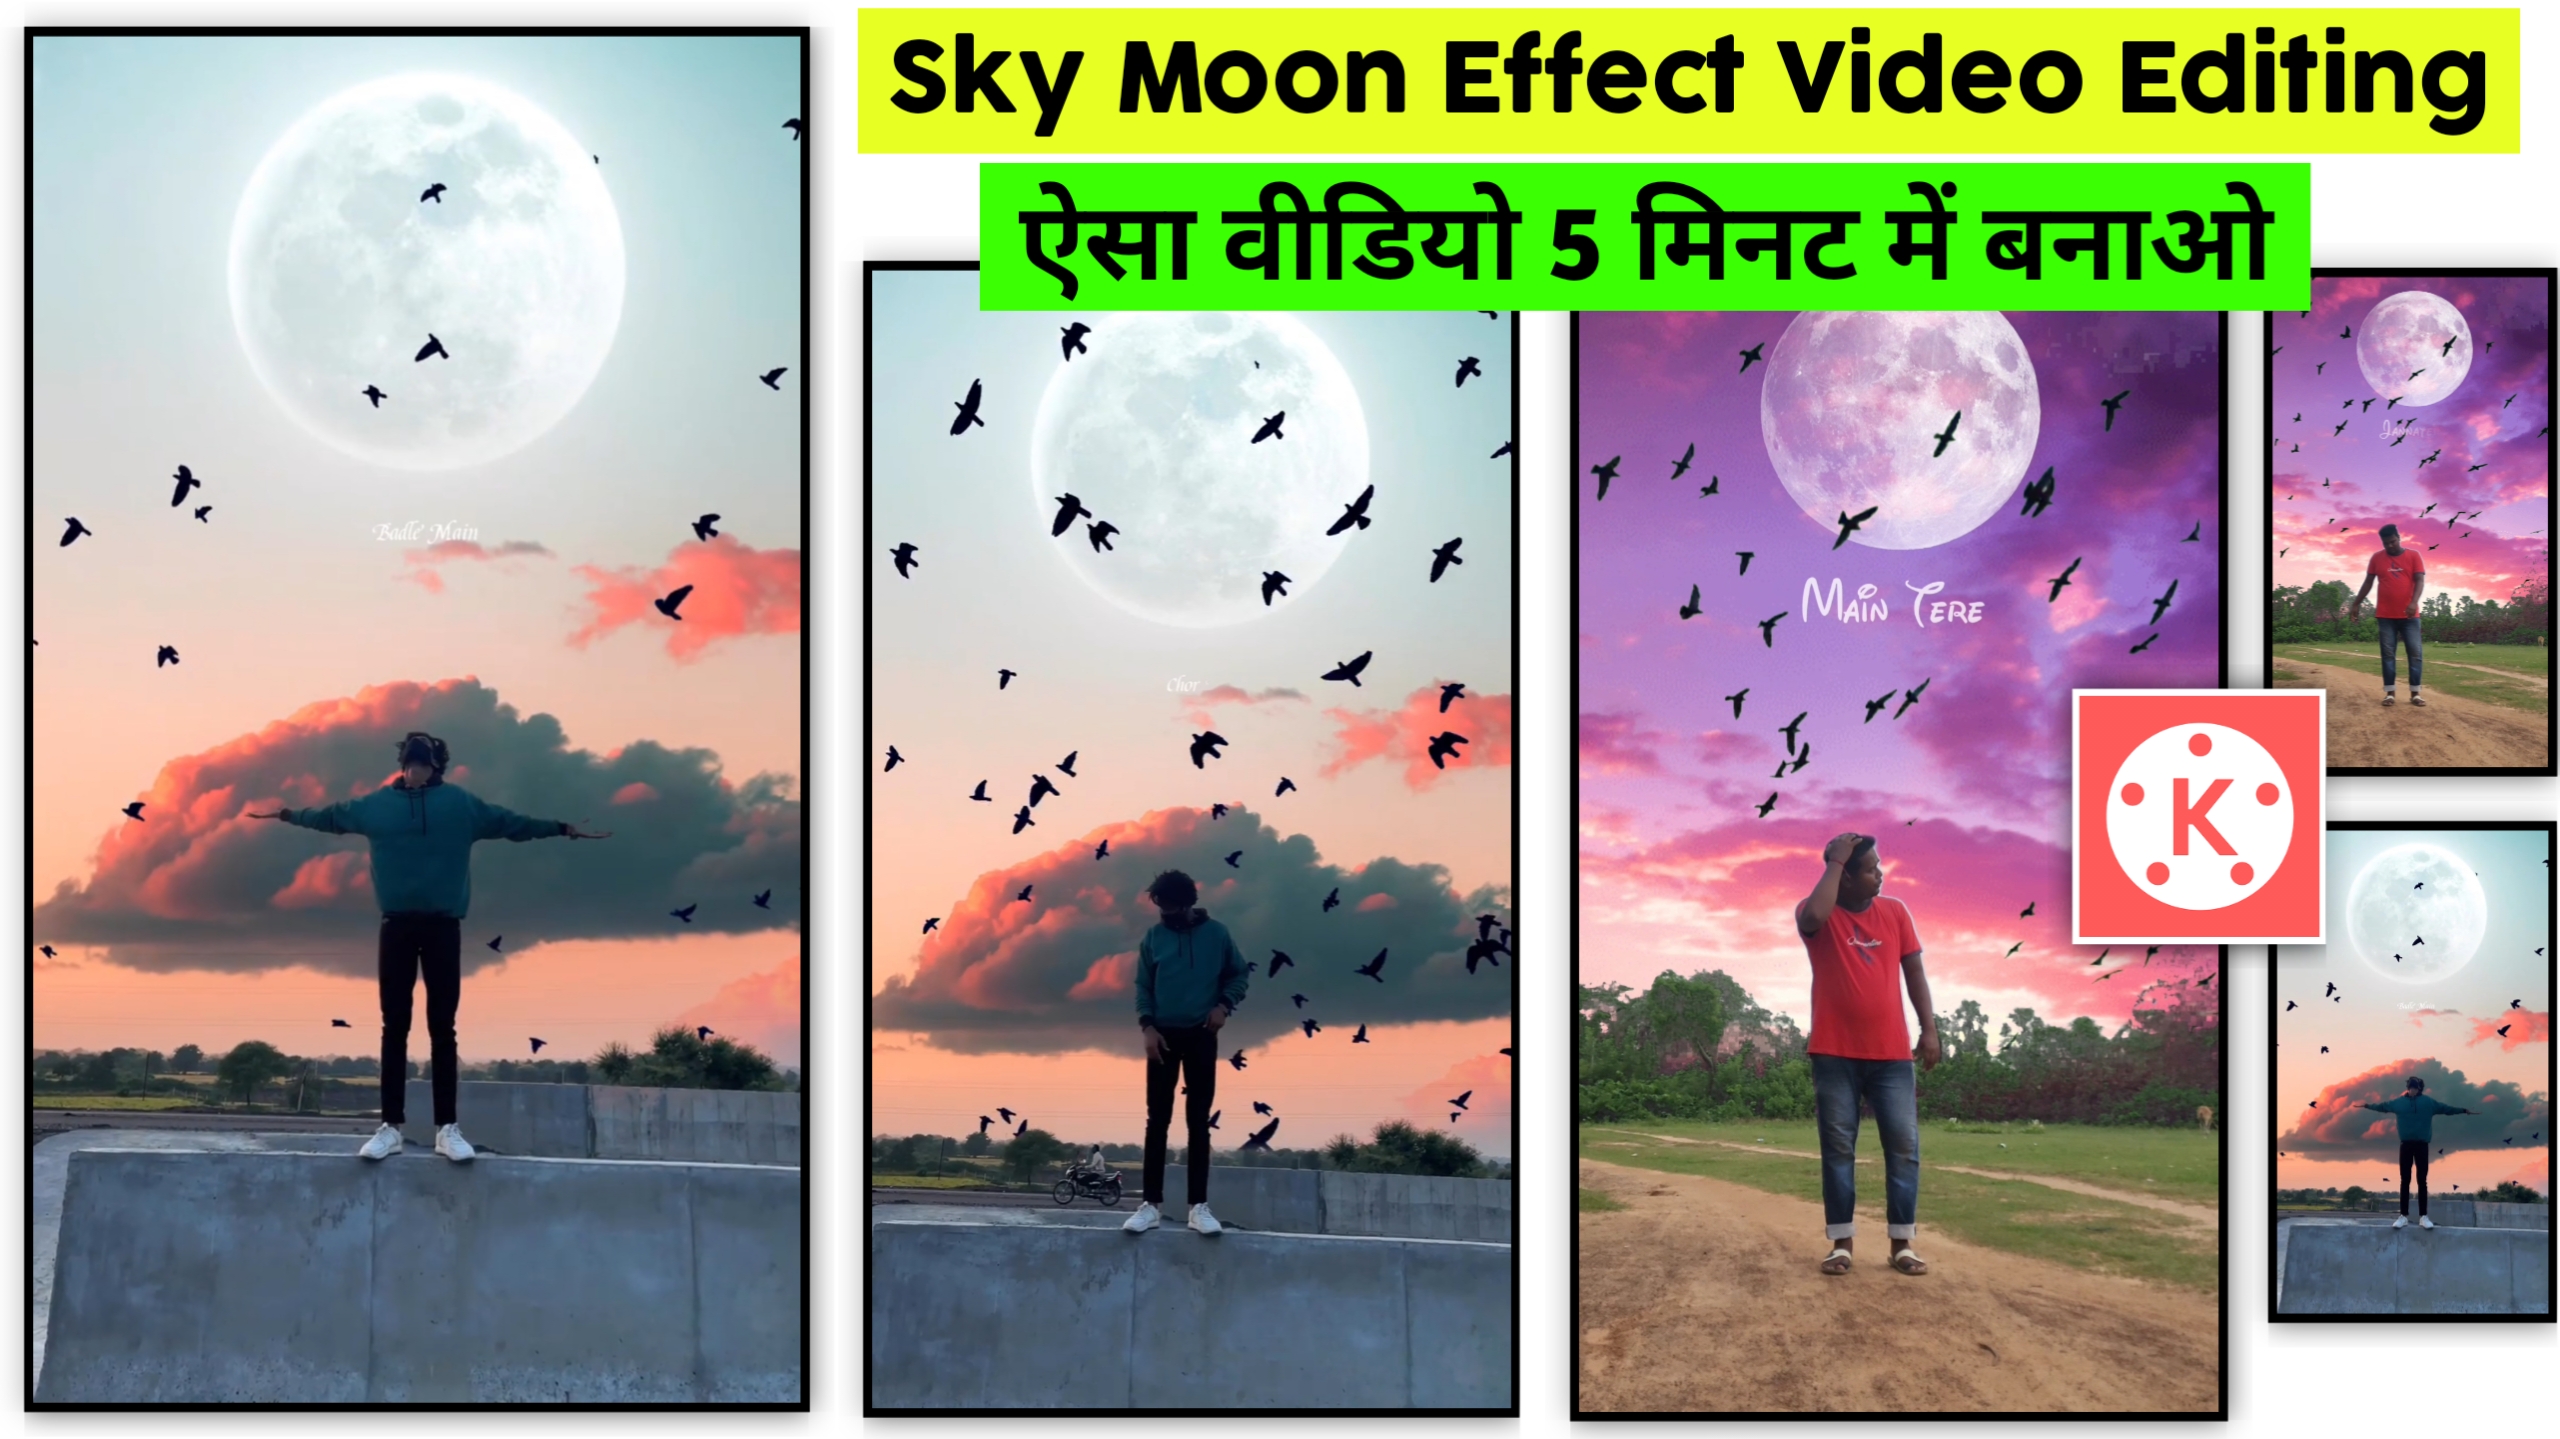 Badle Mein Main Tere Jo Khuda Khud Bhi De || Sky Moon Effect Video Editing || Jsr ka Londa